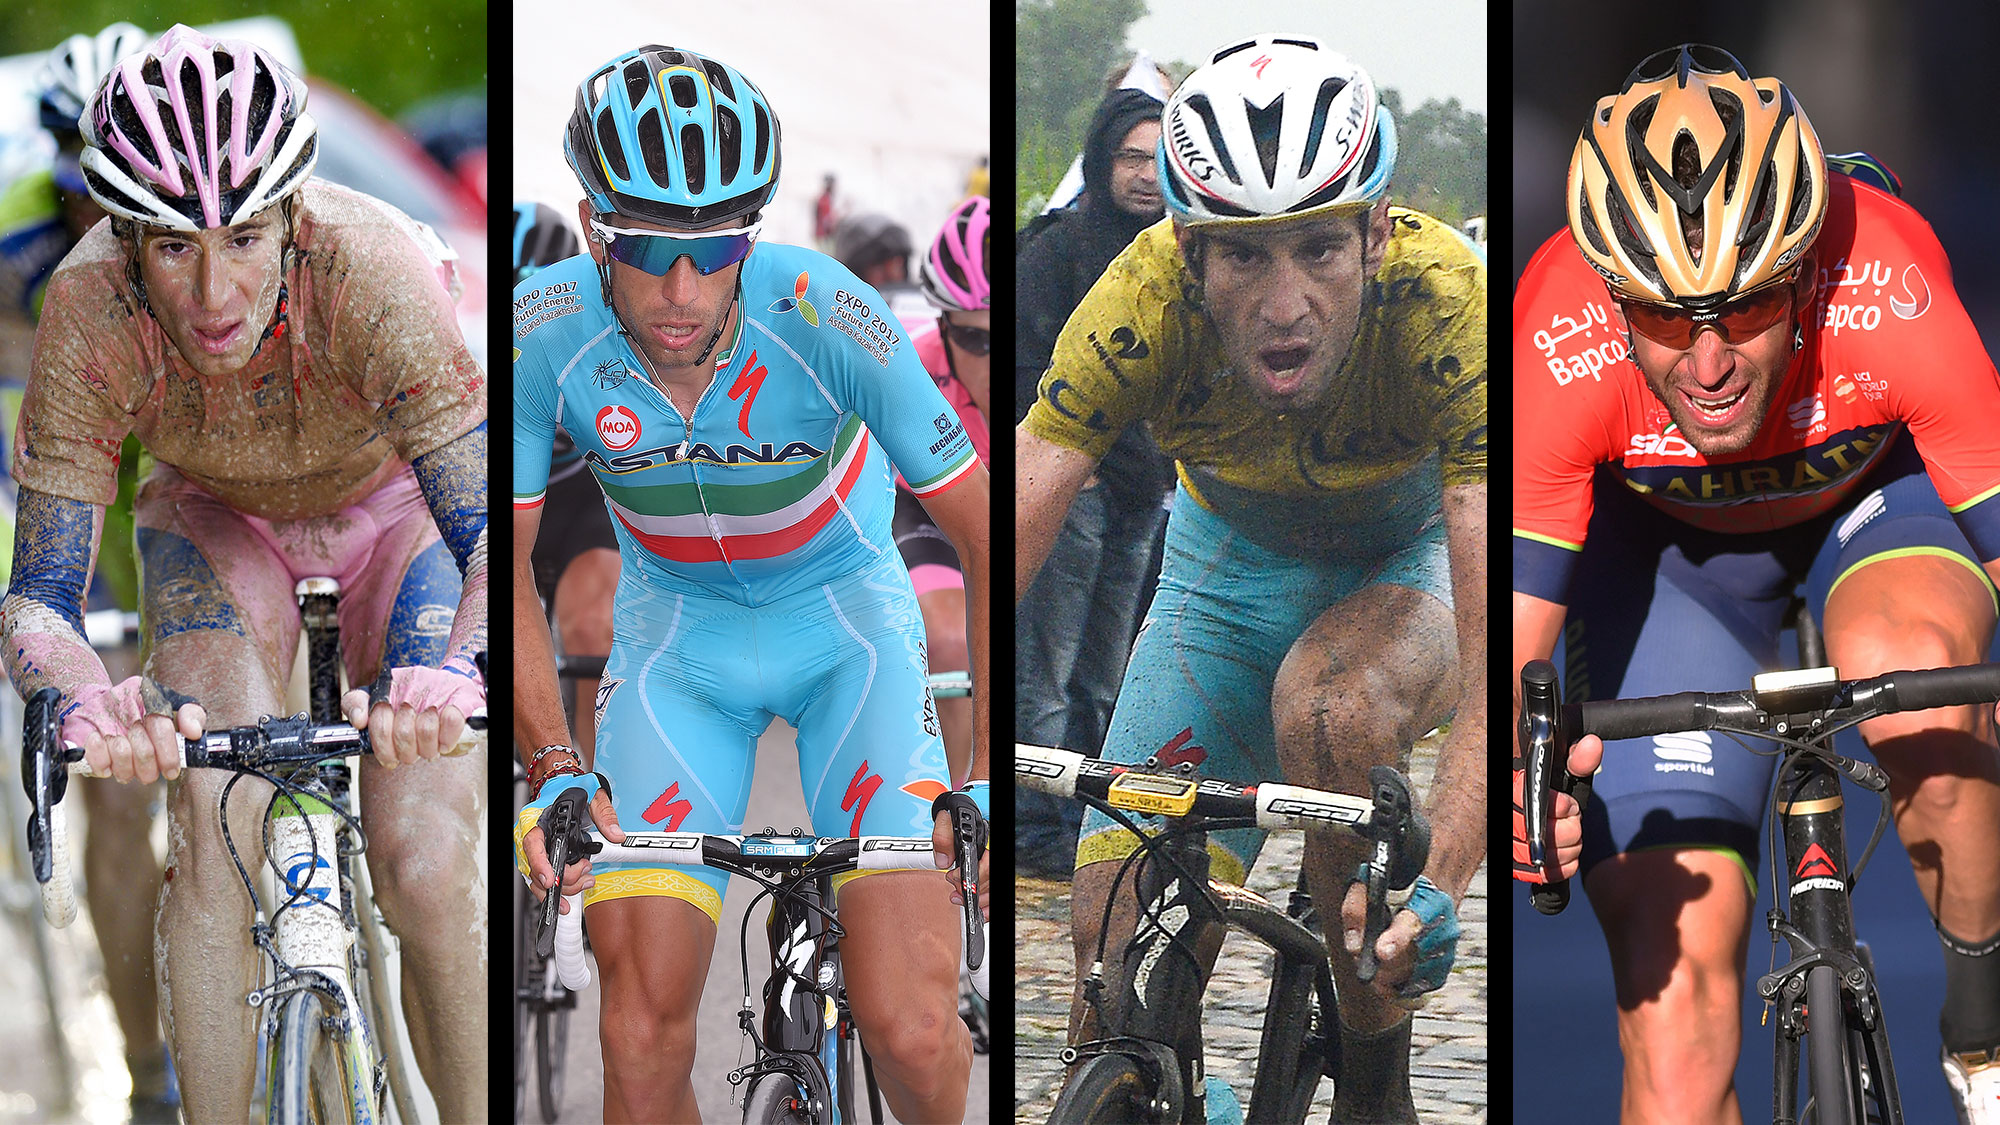 Vincenzo Nibali seven defining moments - Giro d'Italia, Tour de France, Milan-San Remo - Getty Images composite